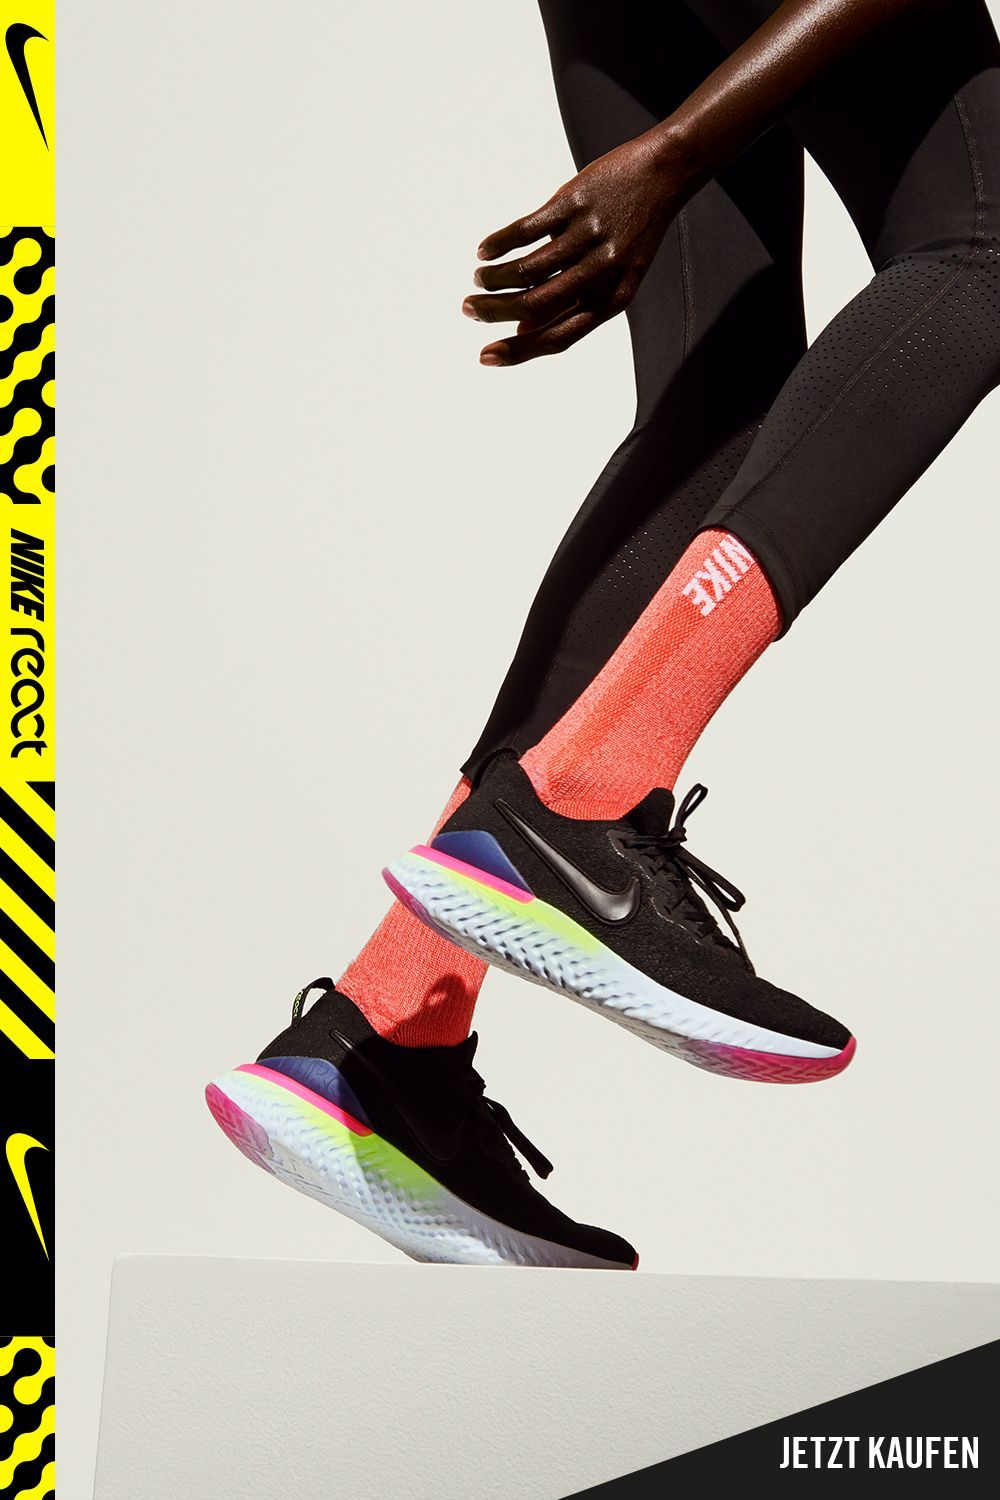 Jetzt neu: Der ultraweiche und superreaktionsfreudige Nike Epic React Flyknit 2. -   23 mens fitness muscle
 ideas